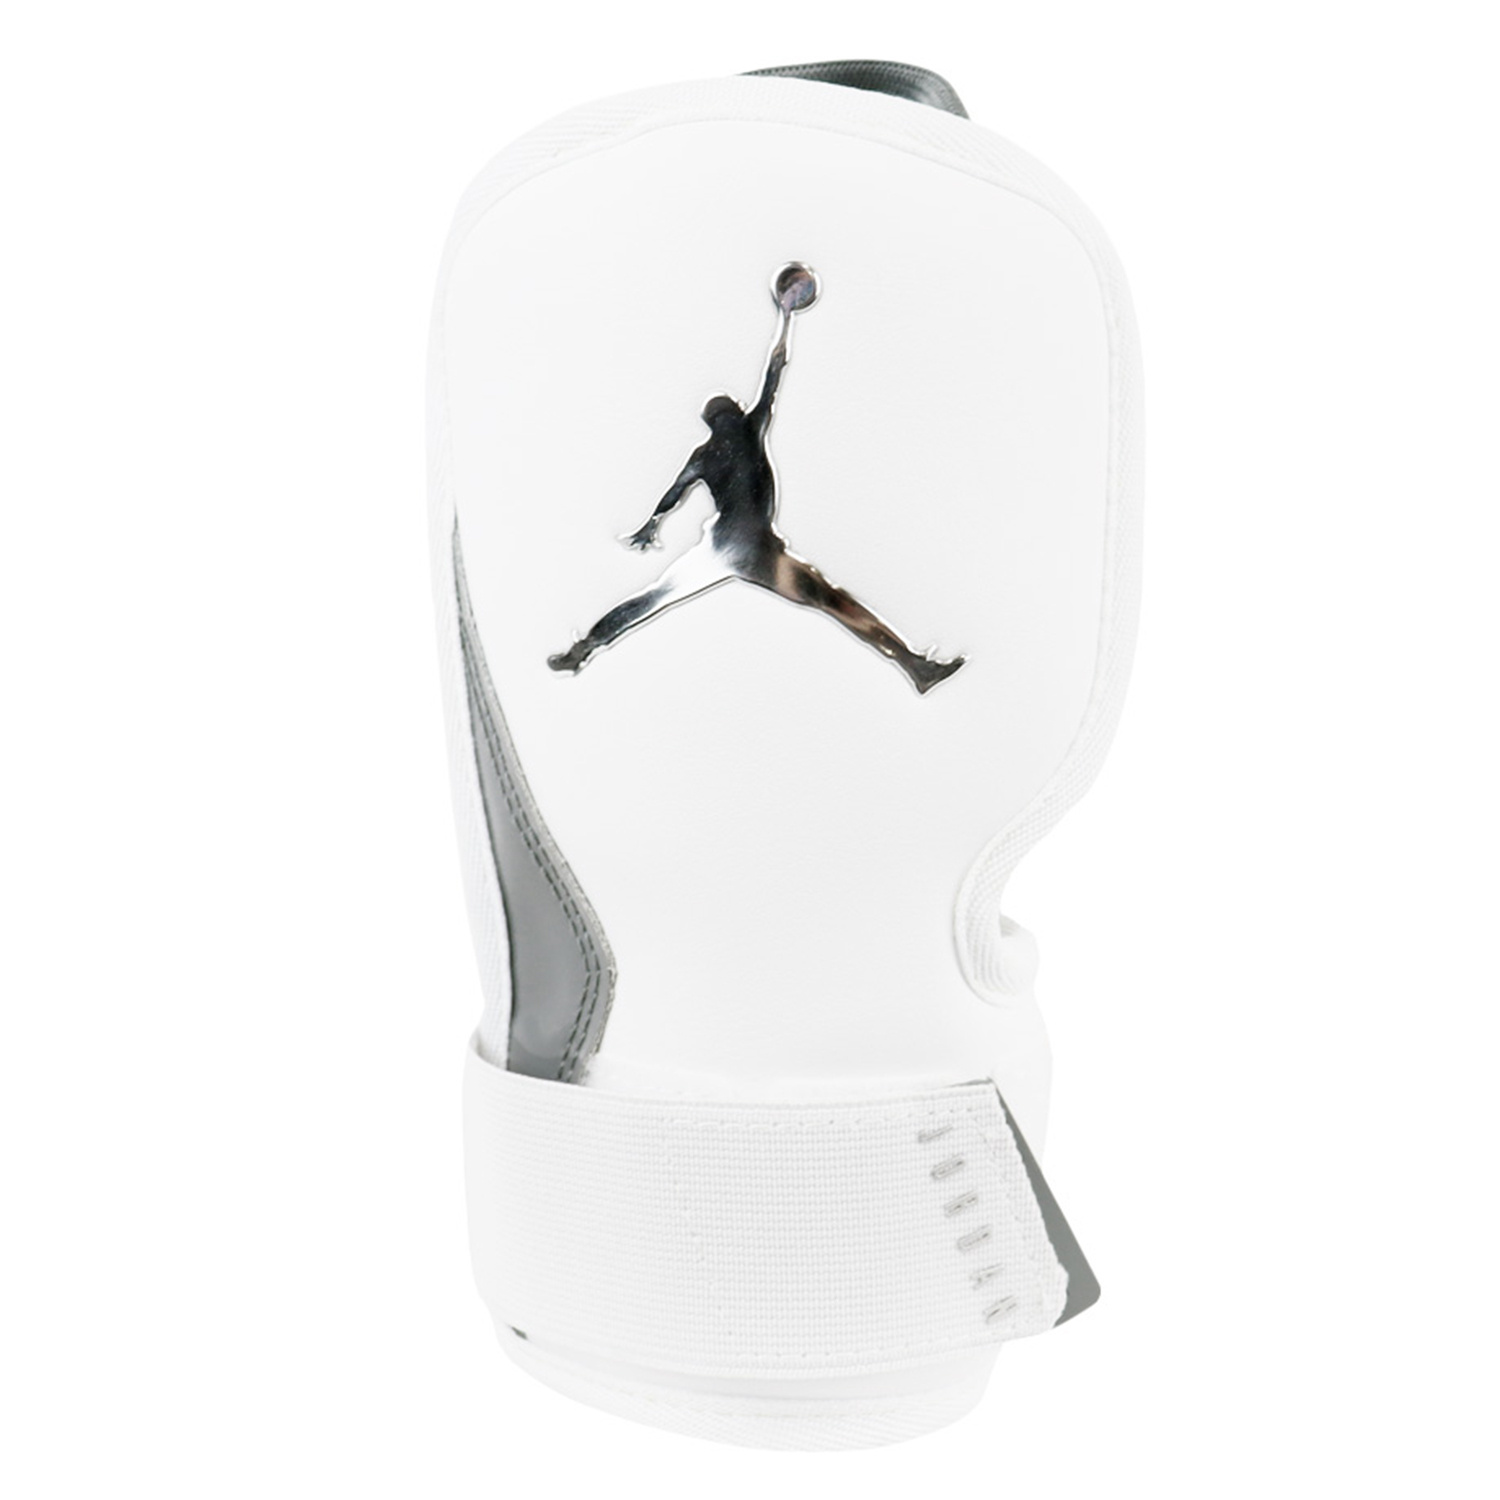 Youth Jordan Brand White NBA Performance Arm Sleeve